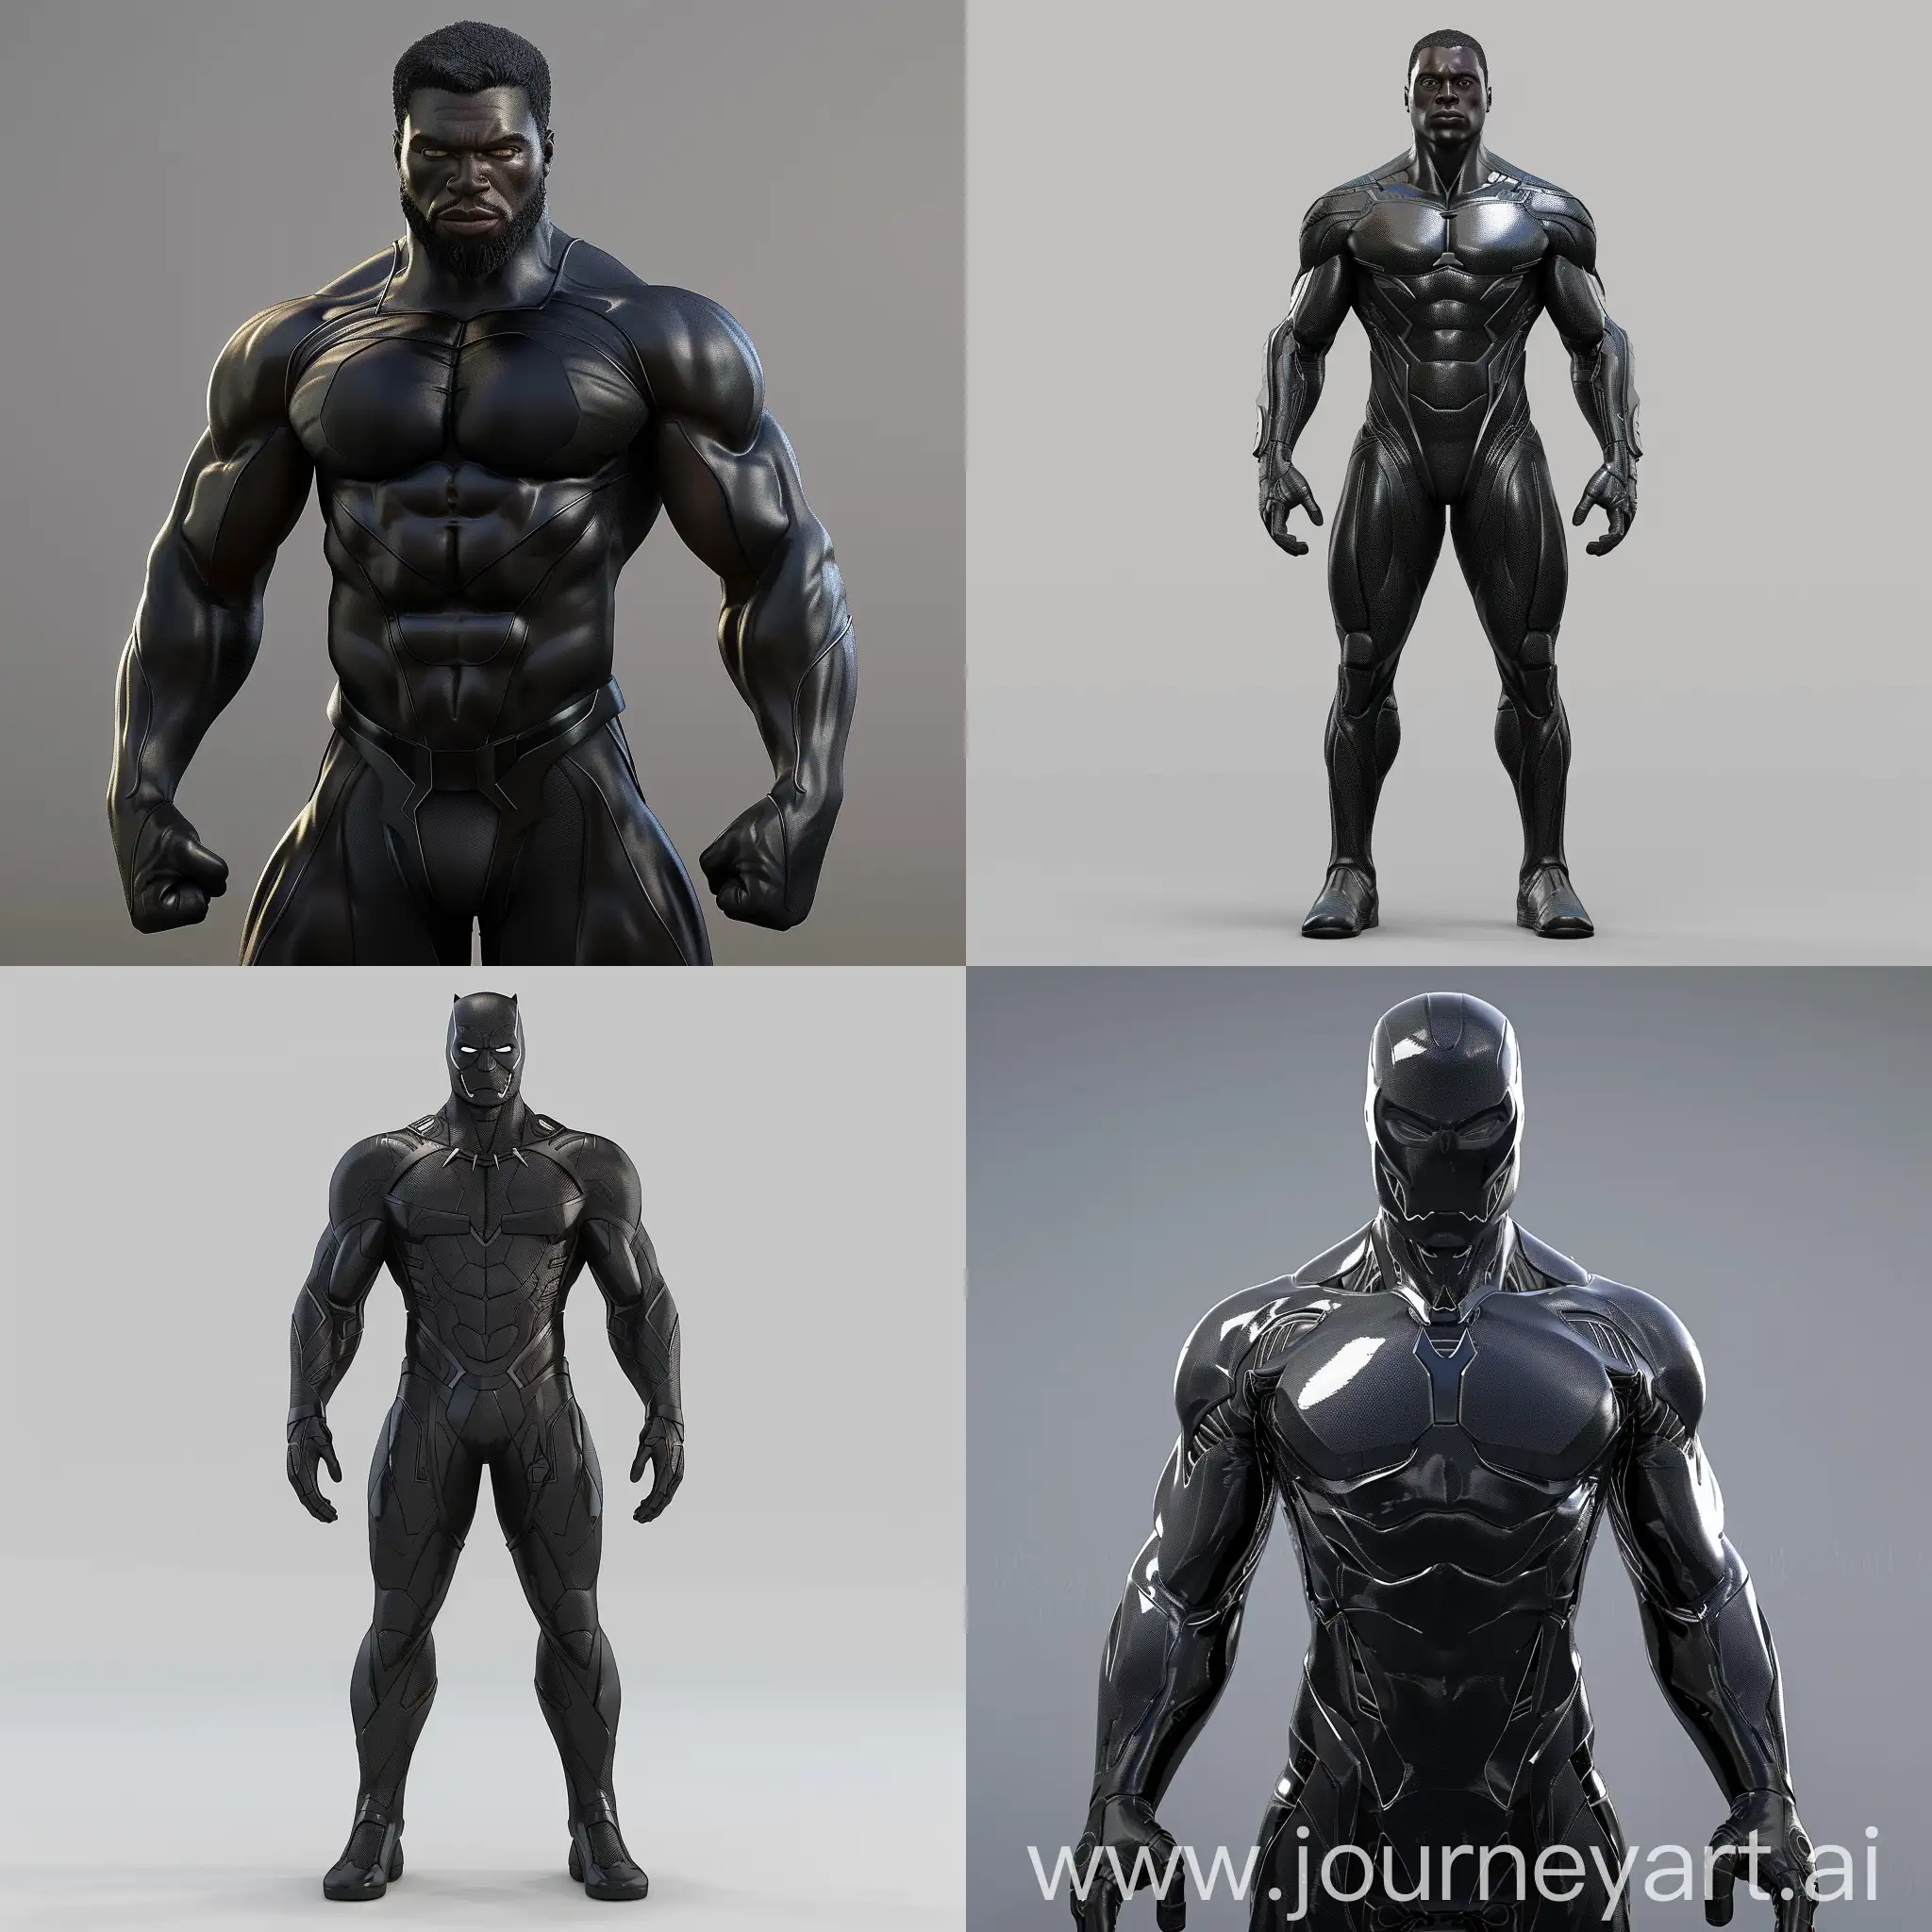 Dynamic-Black-Superhero-in-Sleek-3D-Model